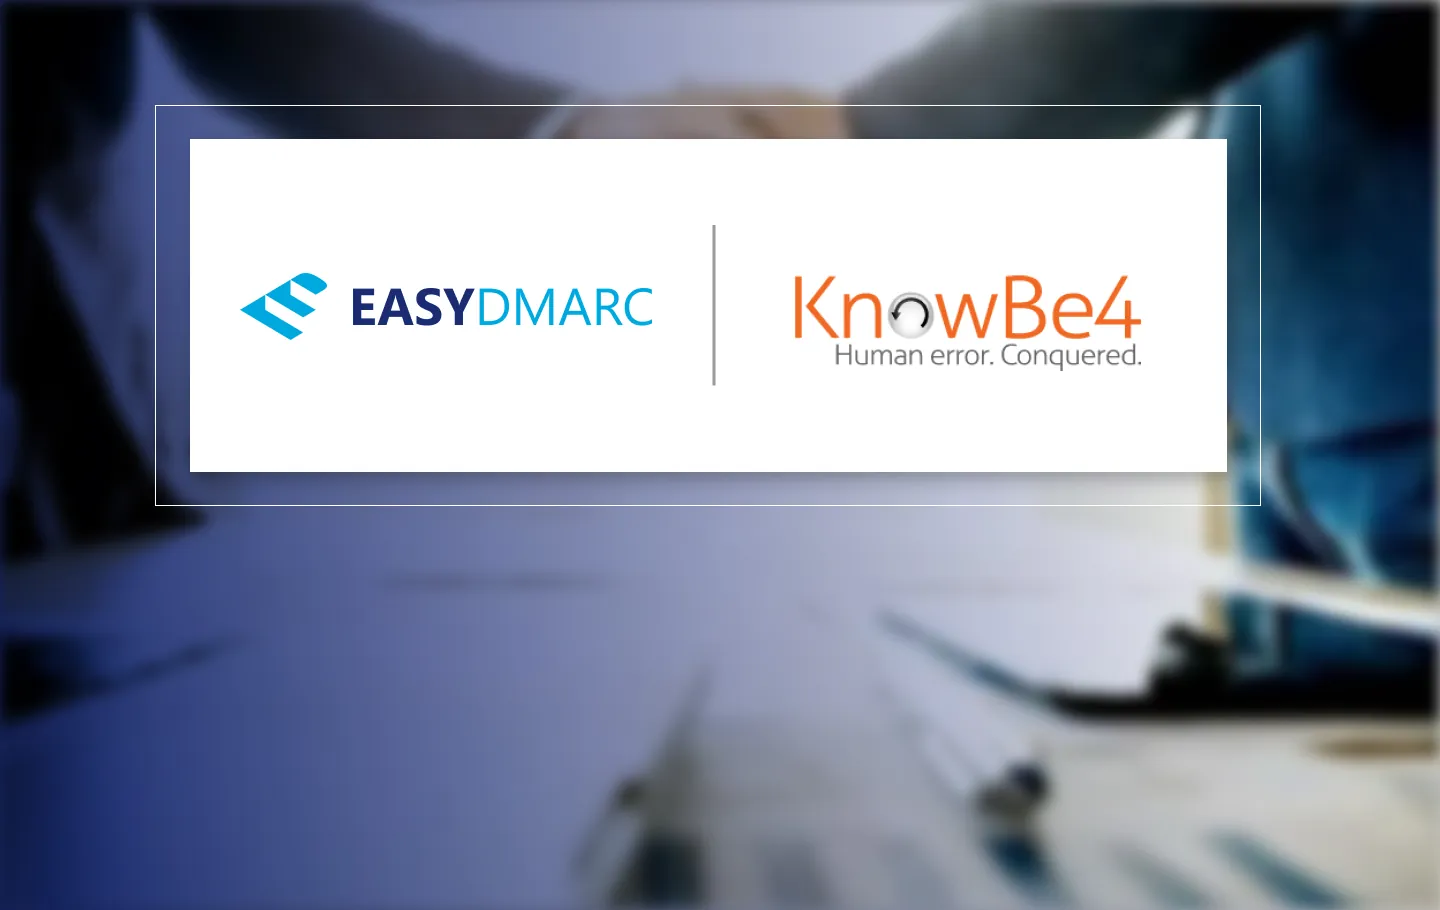 KnowBe4 and EasyDMARC logos on a background of men's handshake